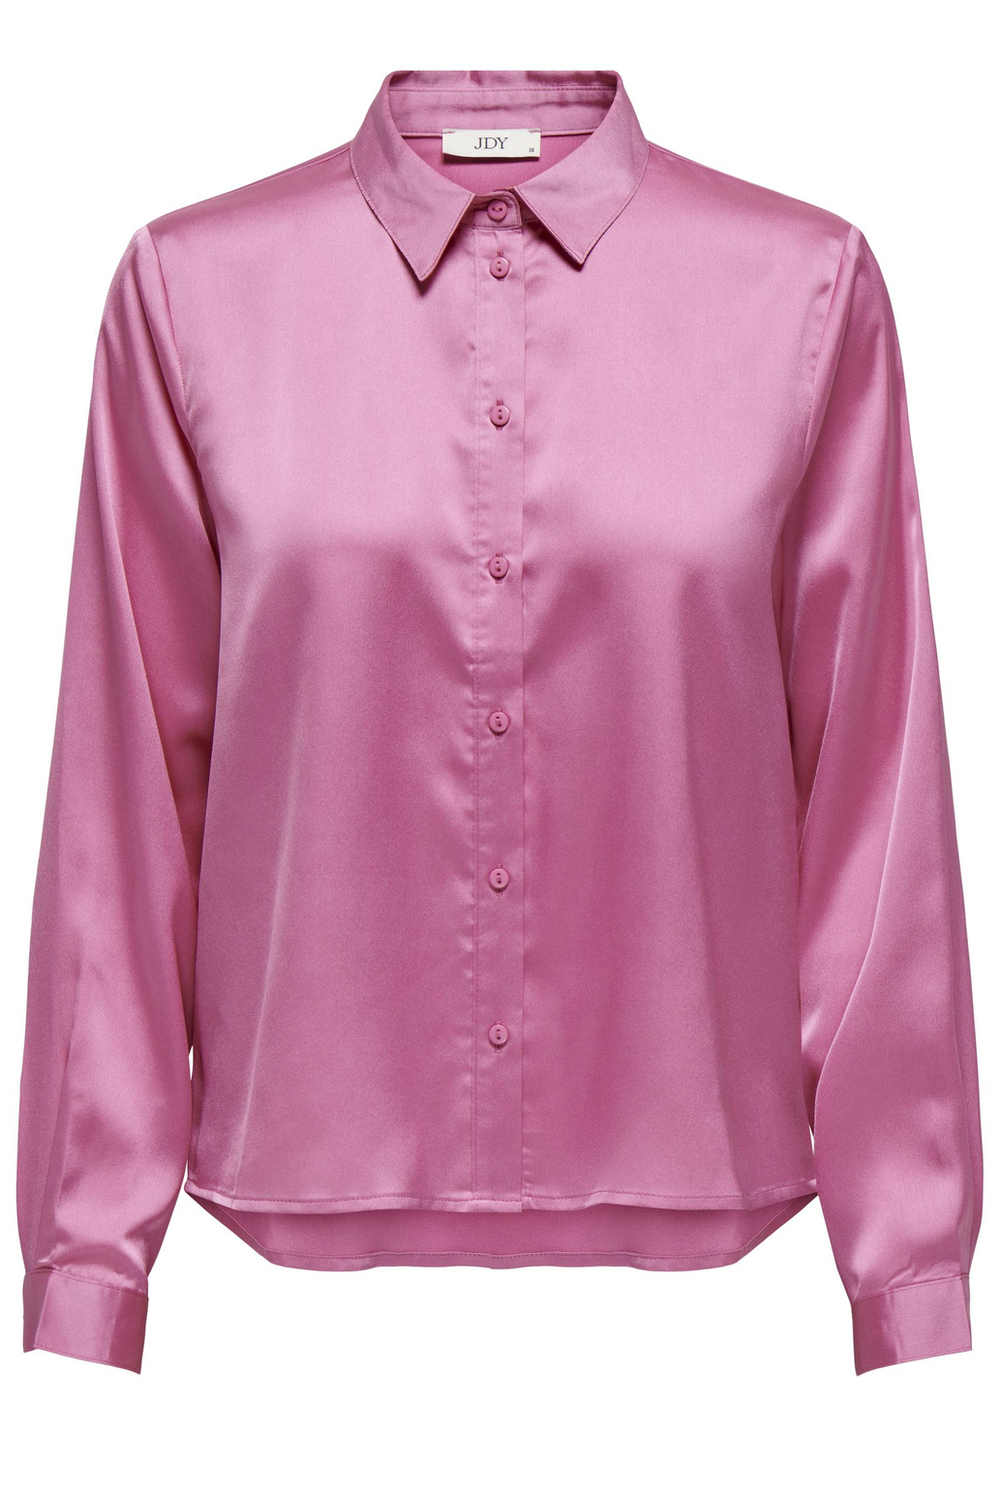 jdyfifi l/s shirt wvn noos 15203504 jacqueline de yong blouse ibis rose